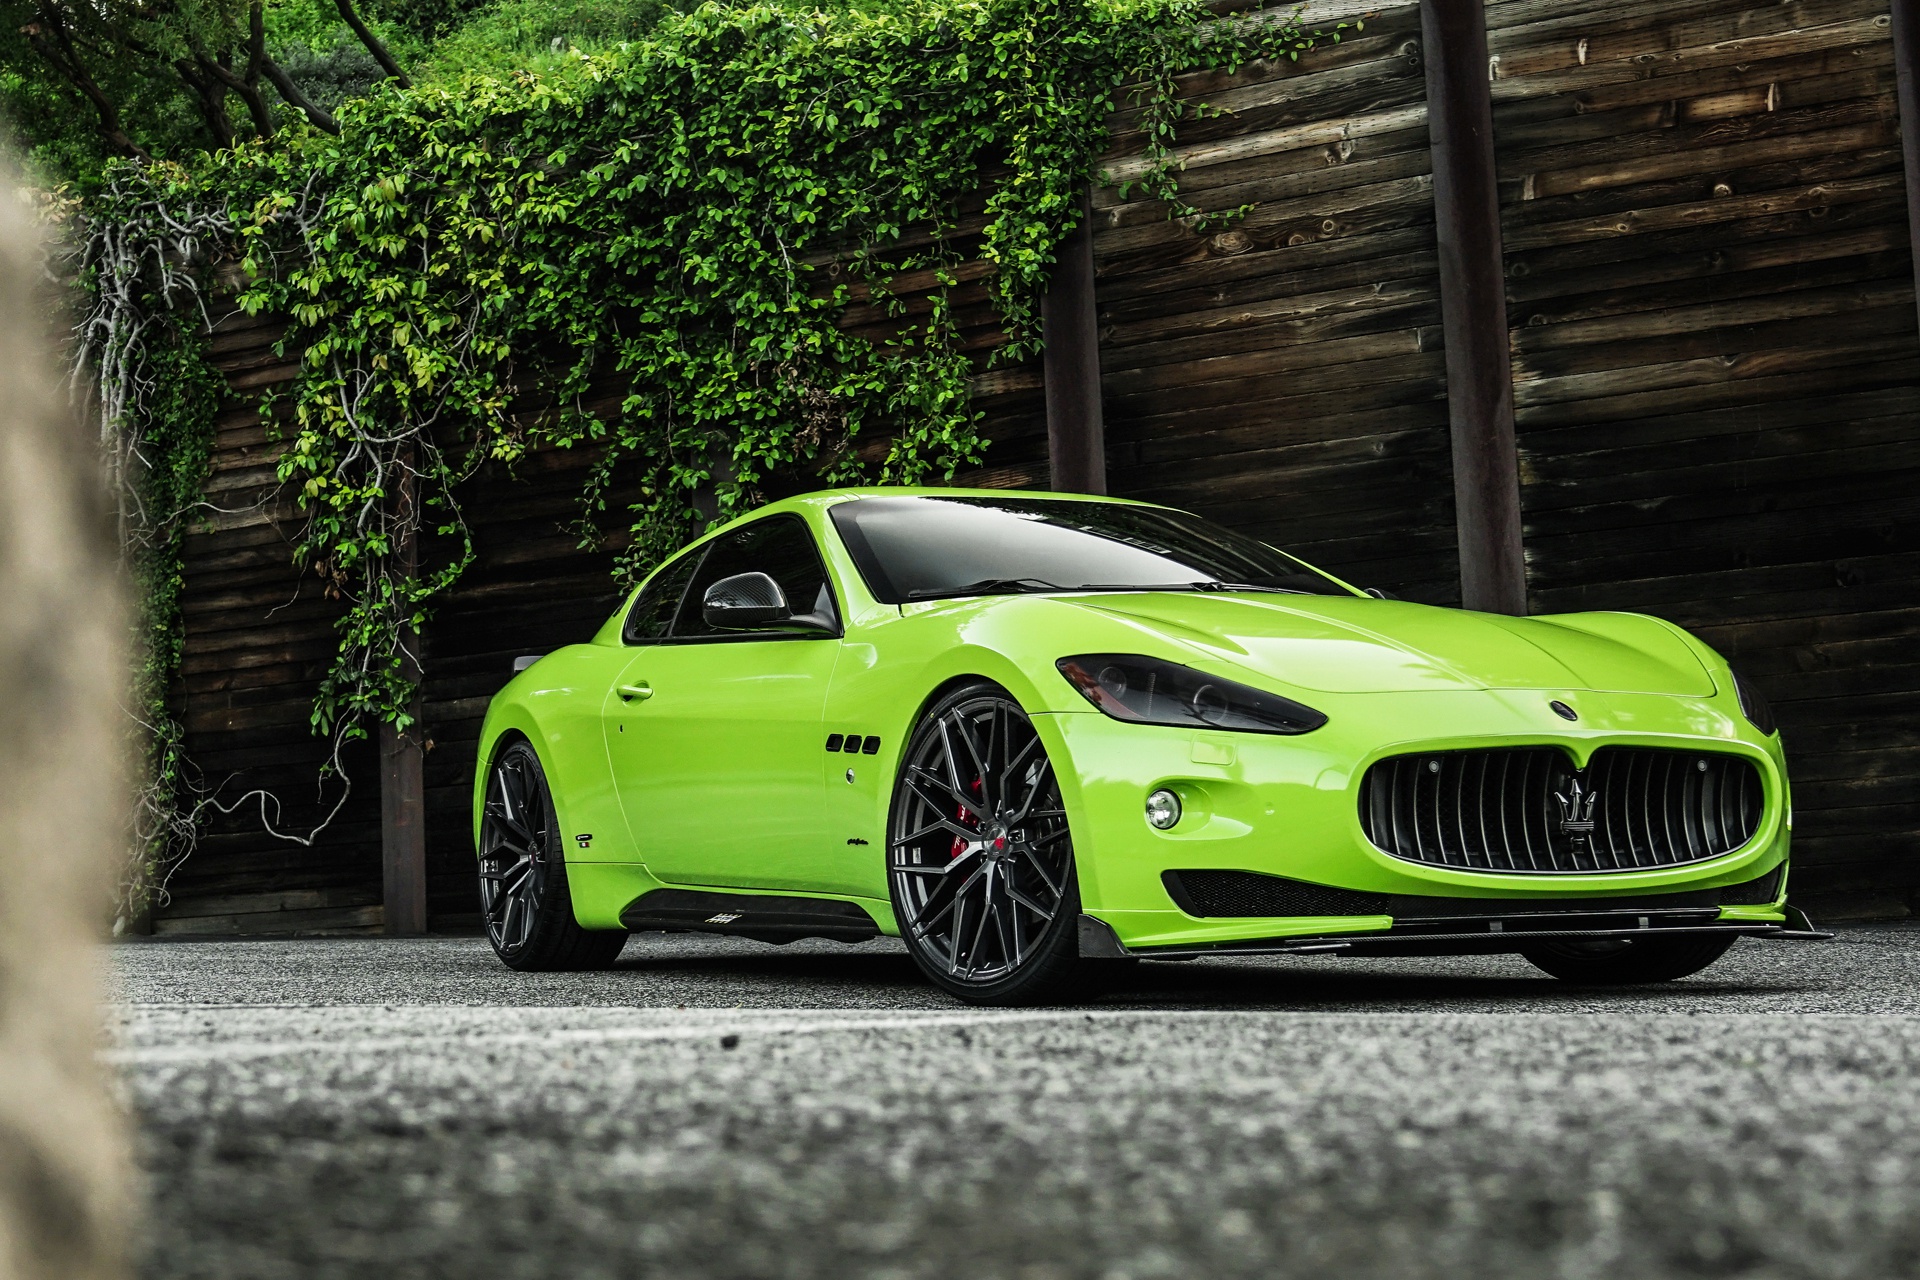 Descarga gratuita de fondo de pantalla para móvil de Maserati, Maserati Quattroporte, Vehículos.